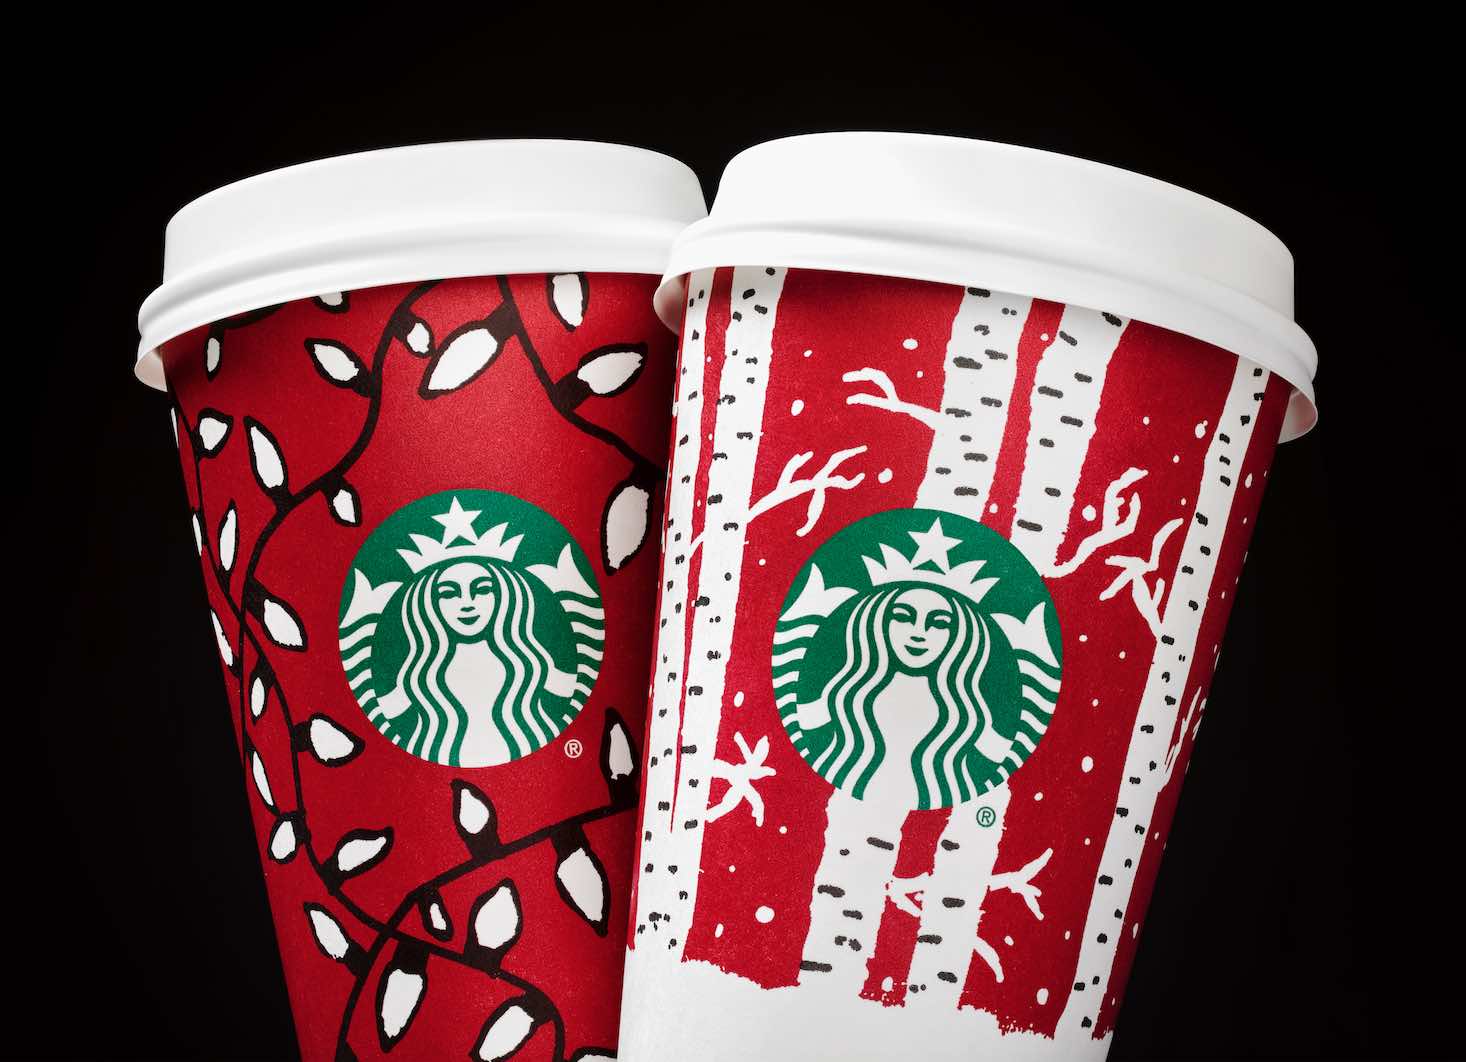 starbucks-customers-designed-festive-cups-aspirantsg